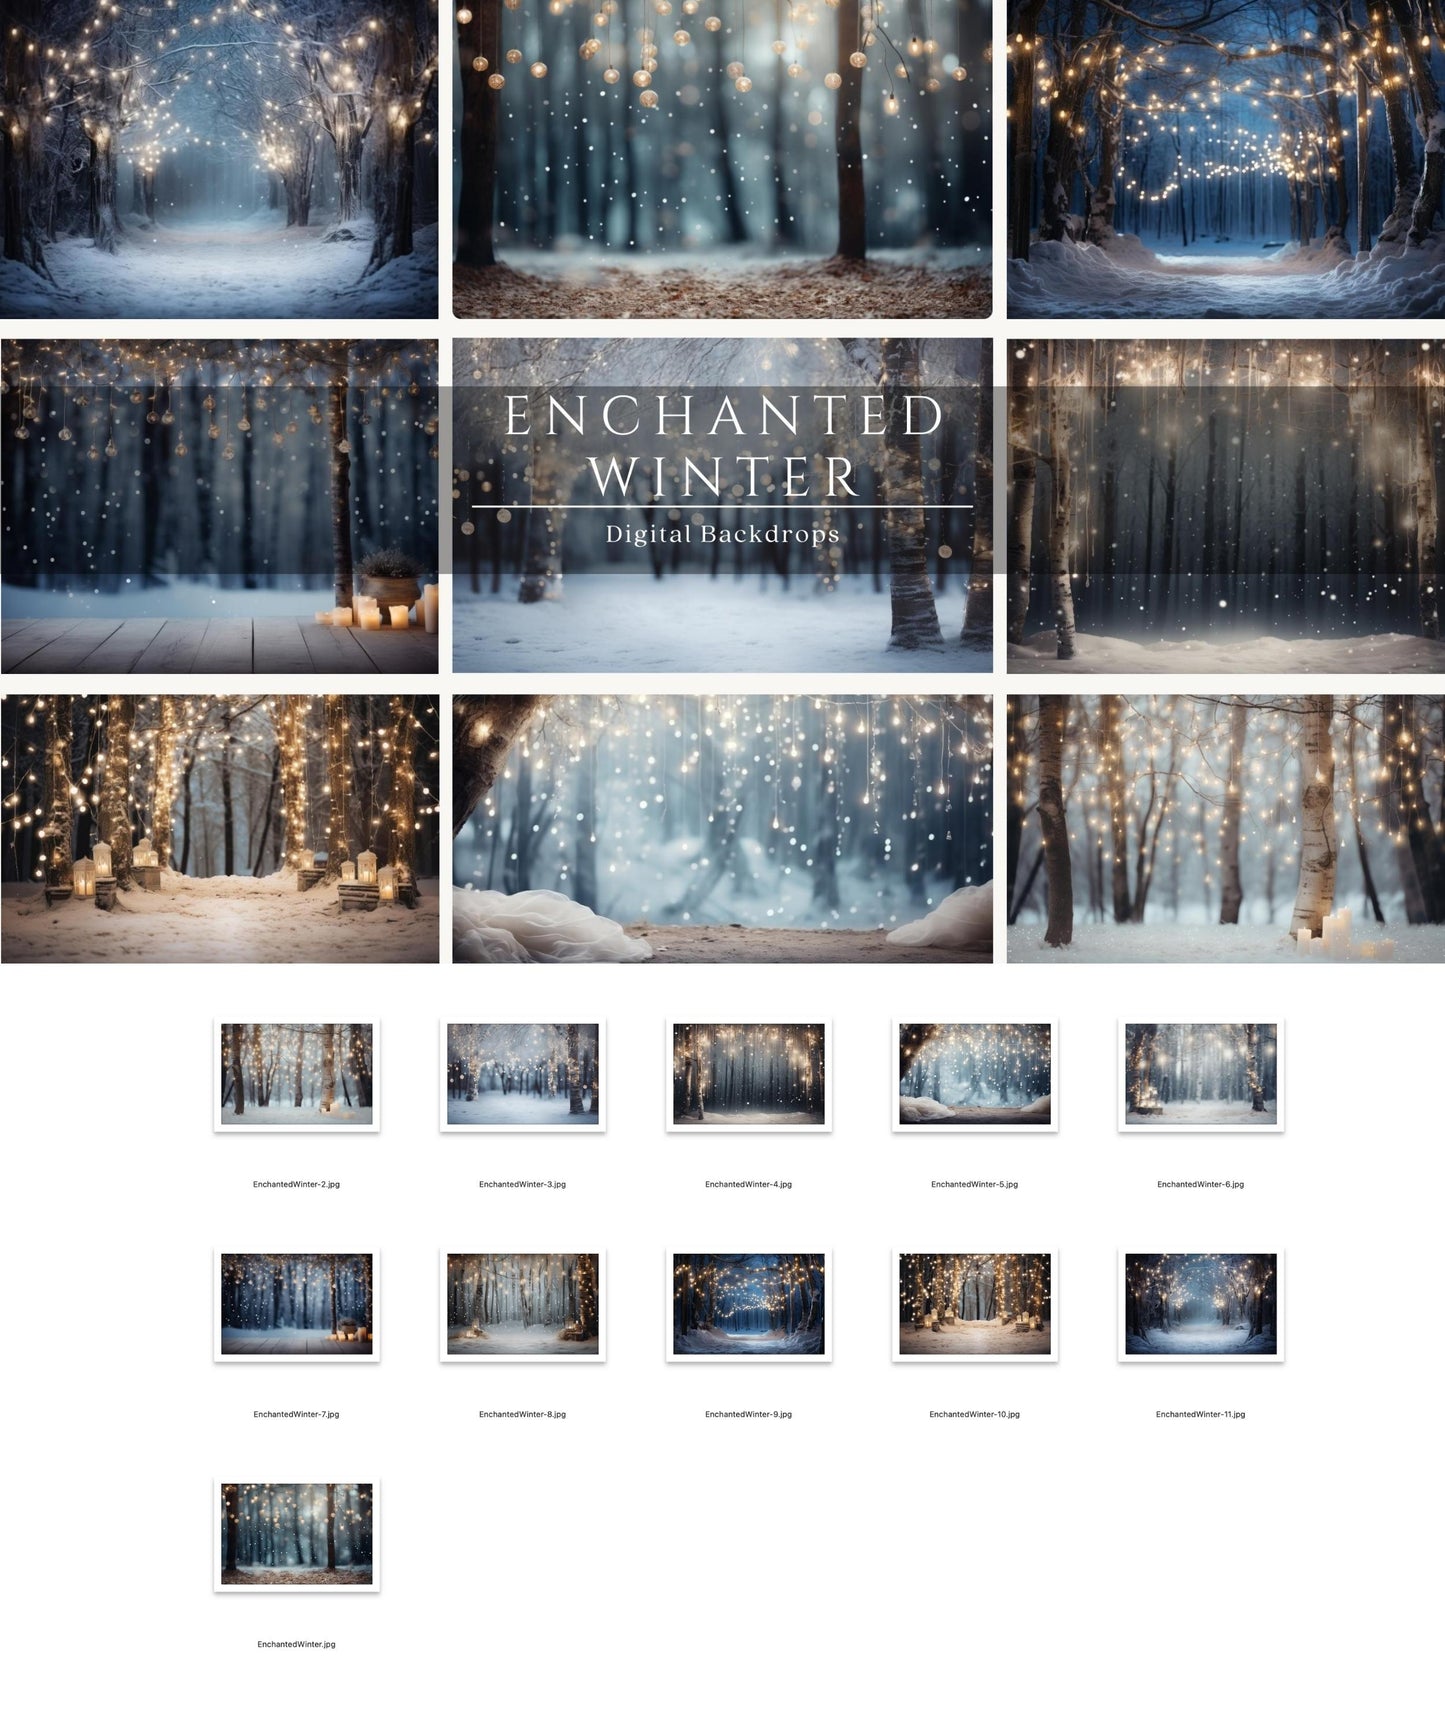 Enchanted Winter Digital Backdrops